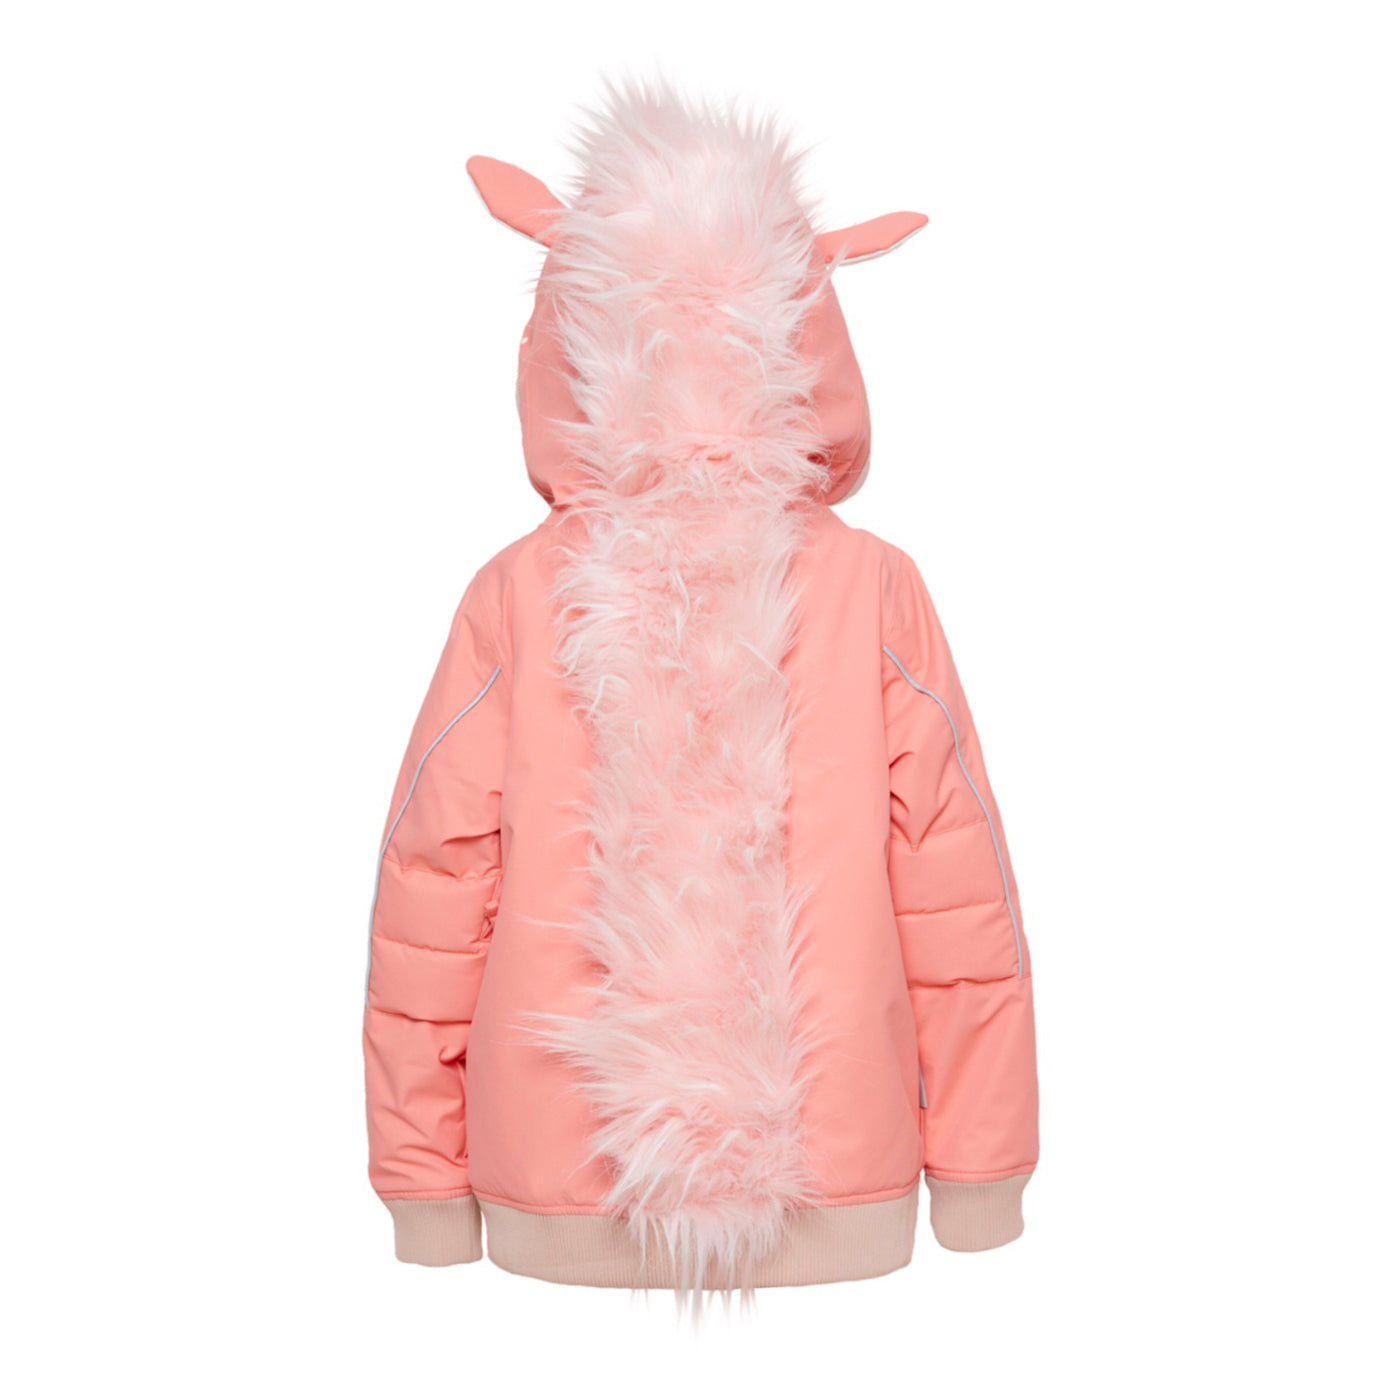 WeeDo Kids Snow Jacket Unicorn - last one left - size 152cm